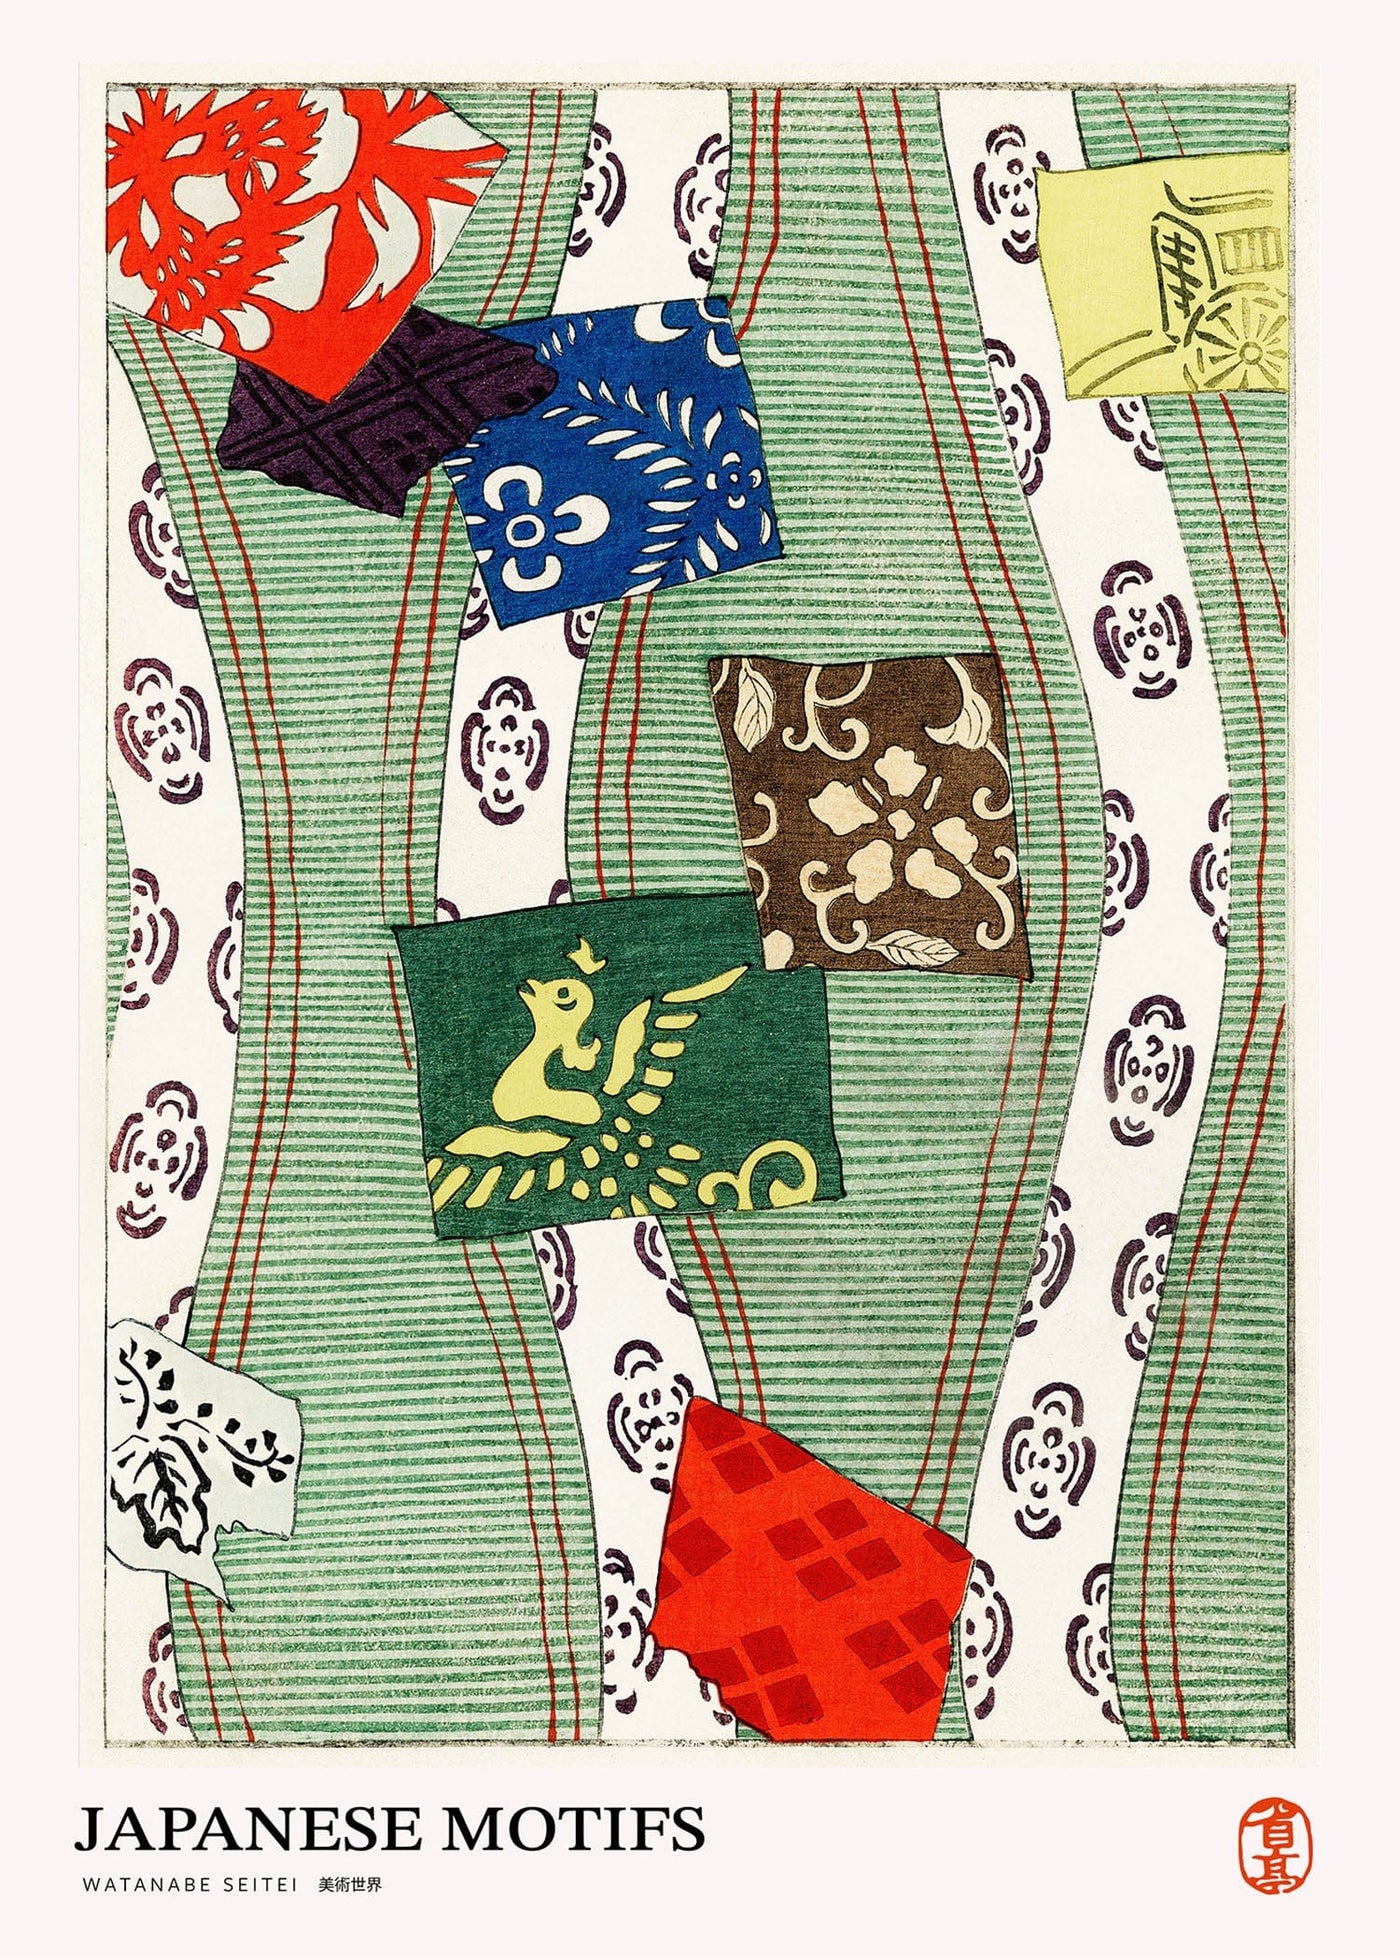 Japanese motifs